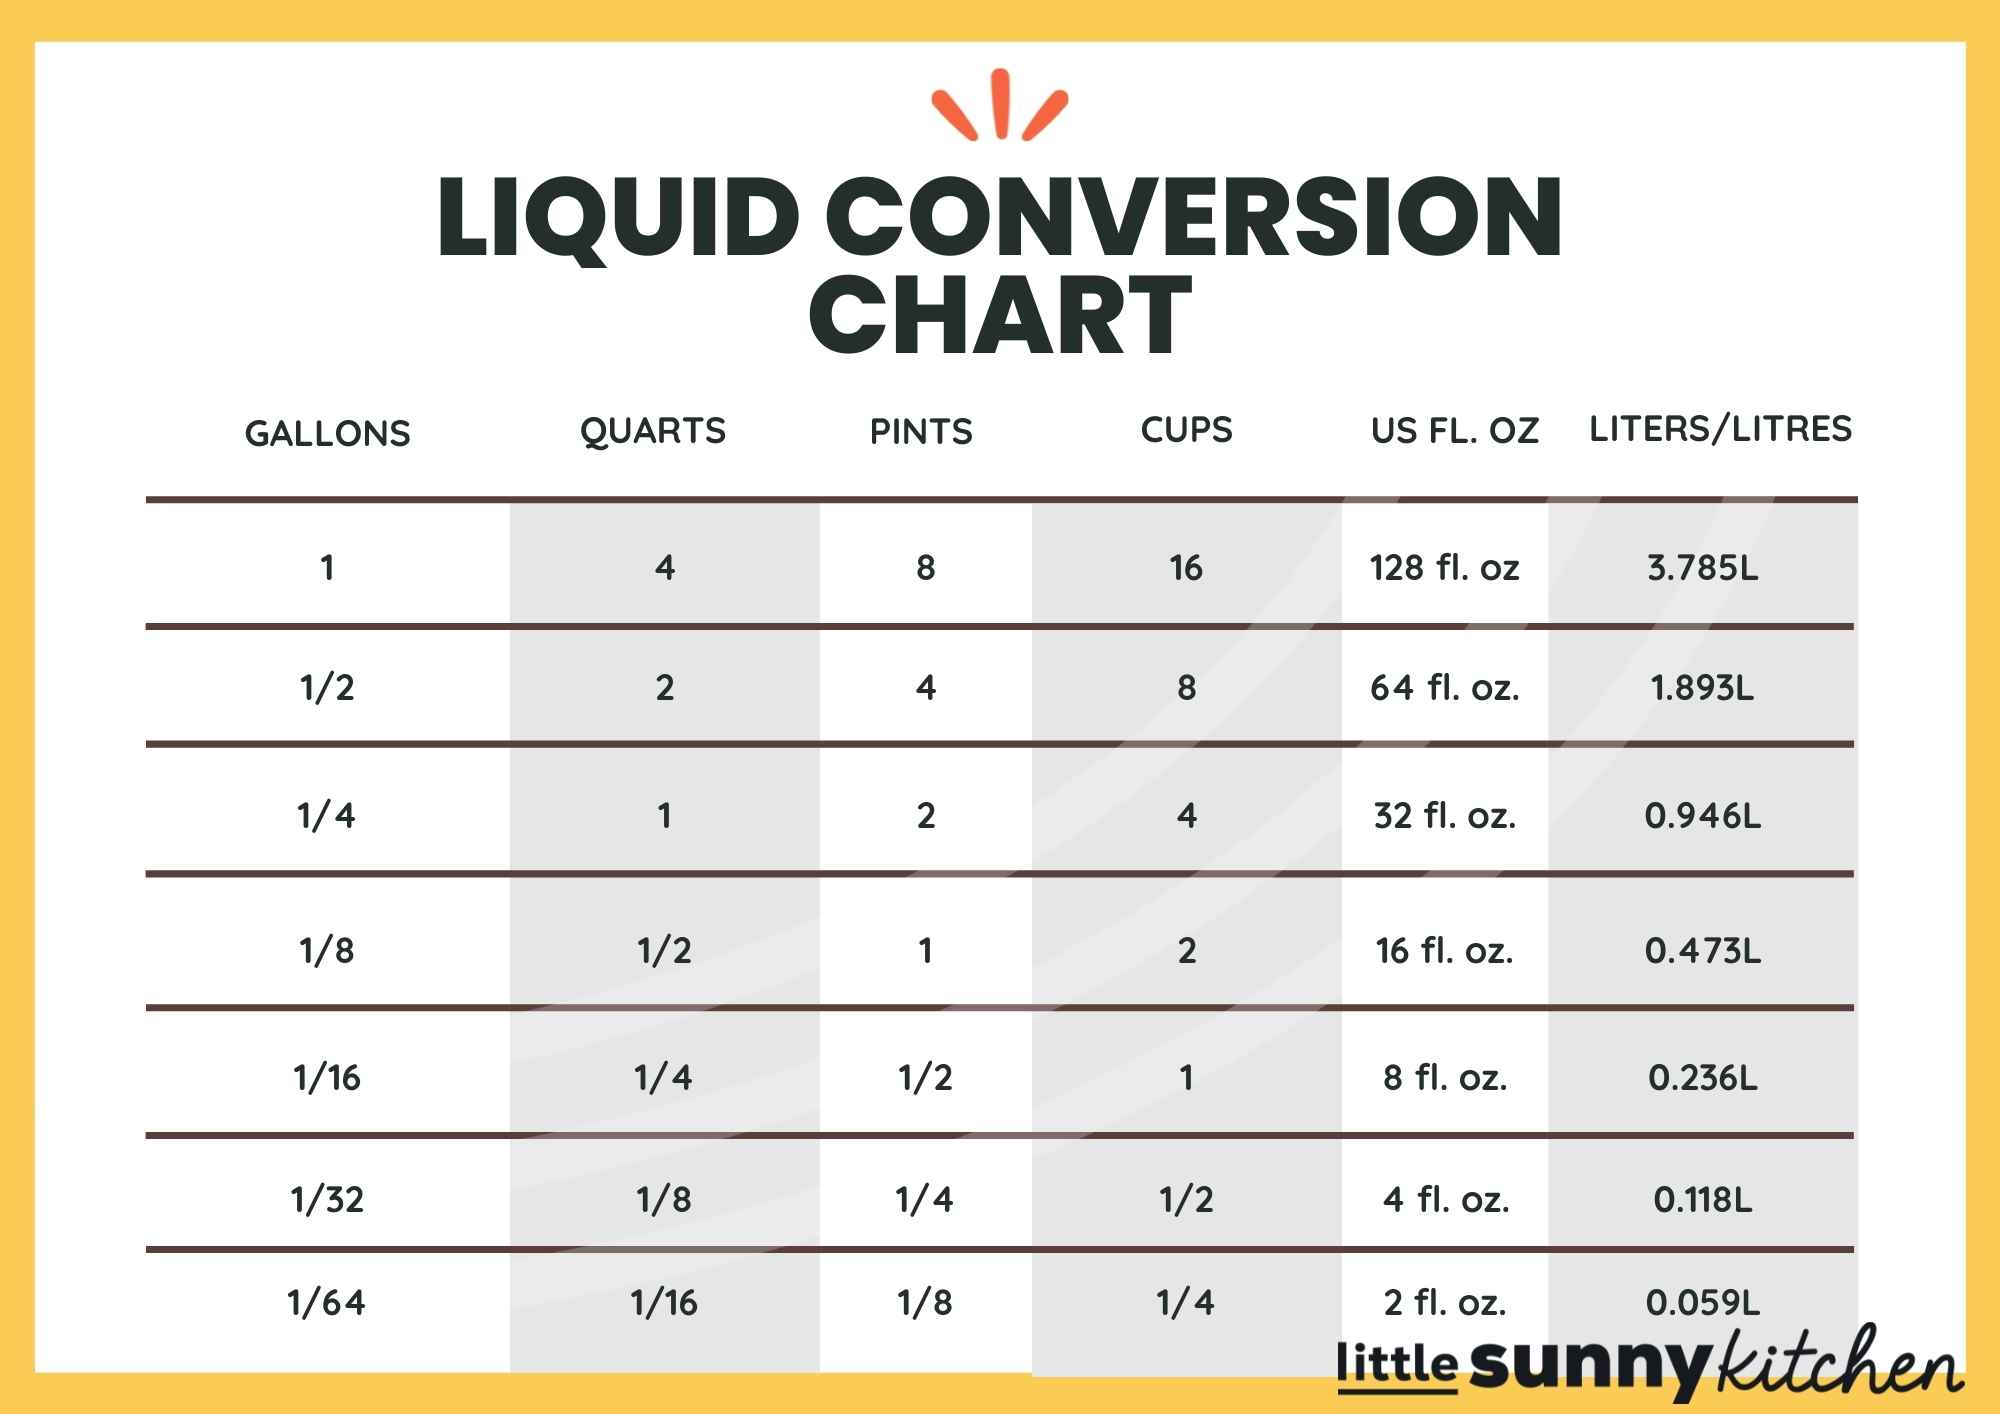 Liquid conversion chart/table